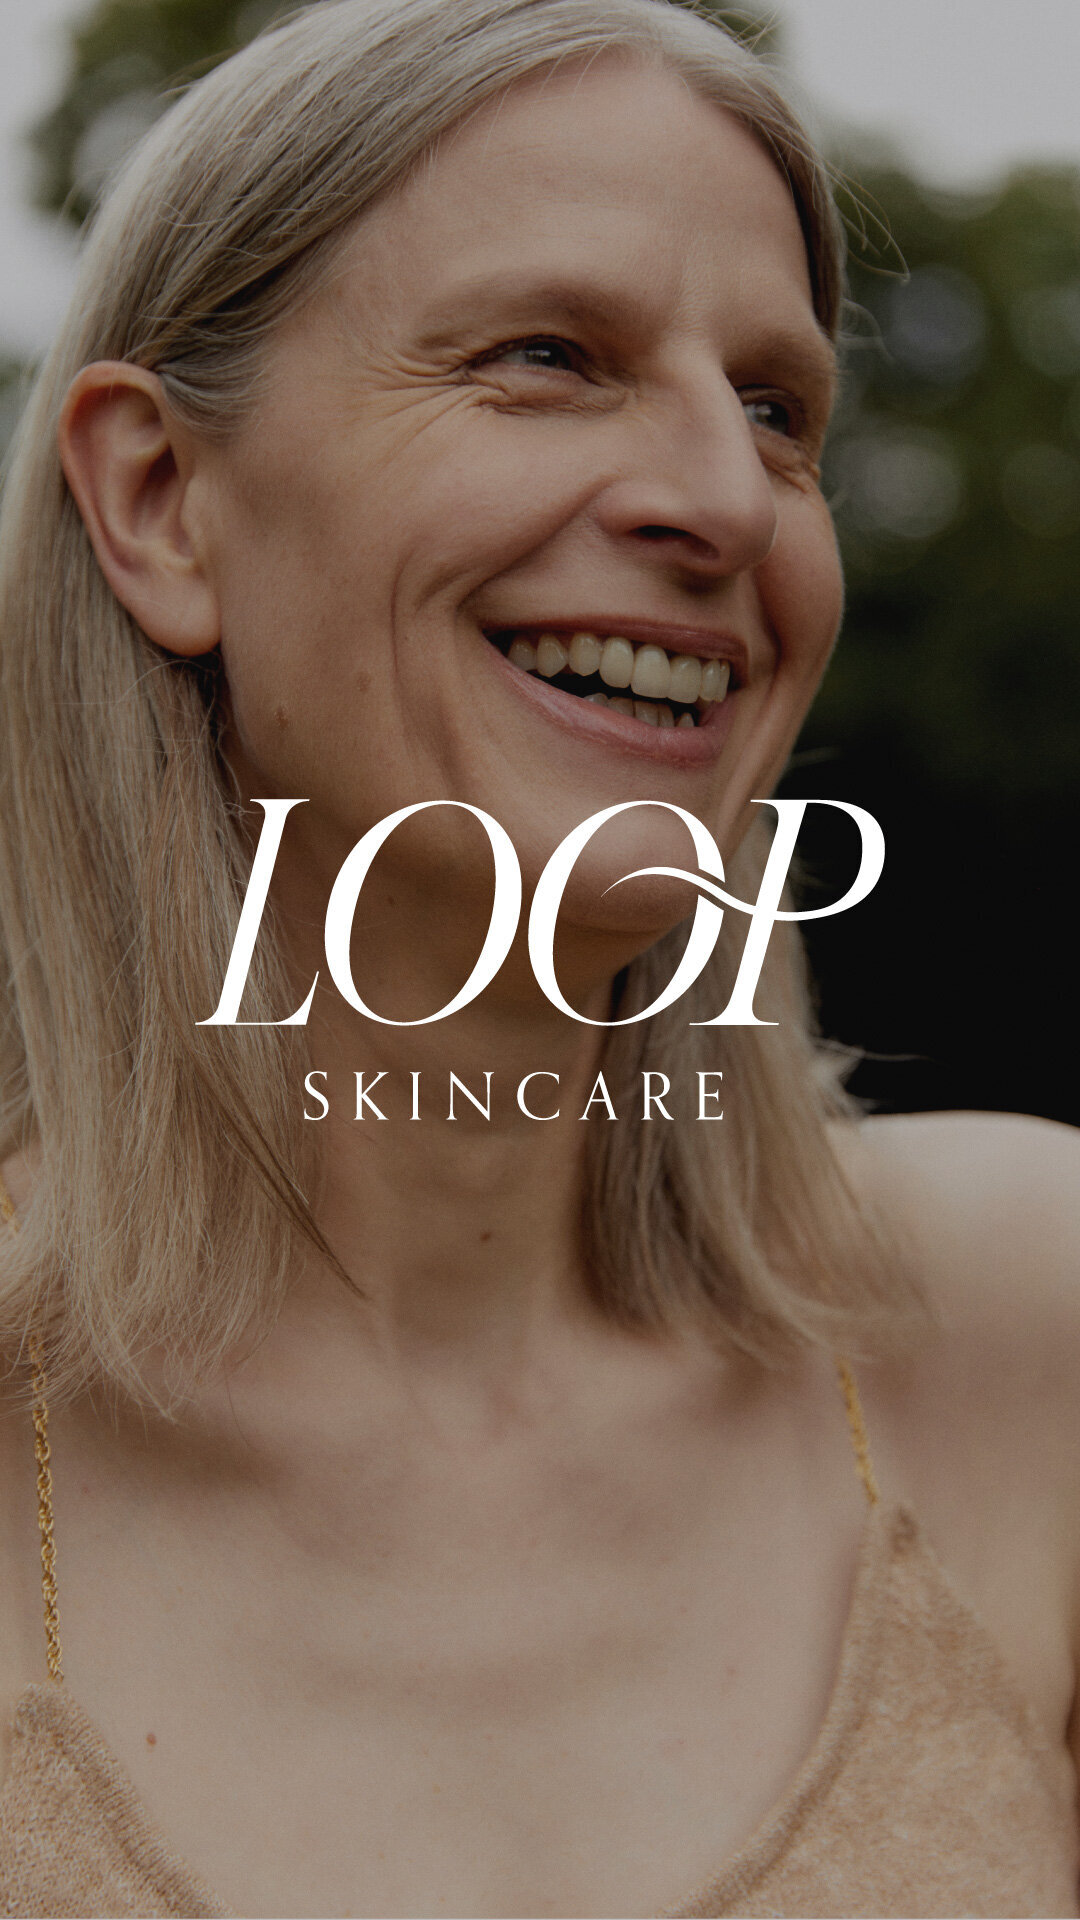 A mockup of the Loop Skincare logo